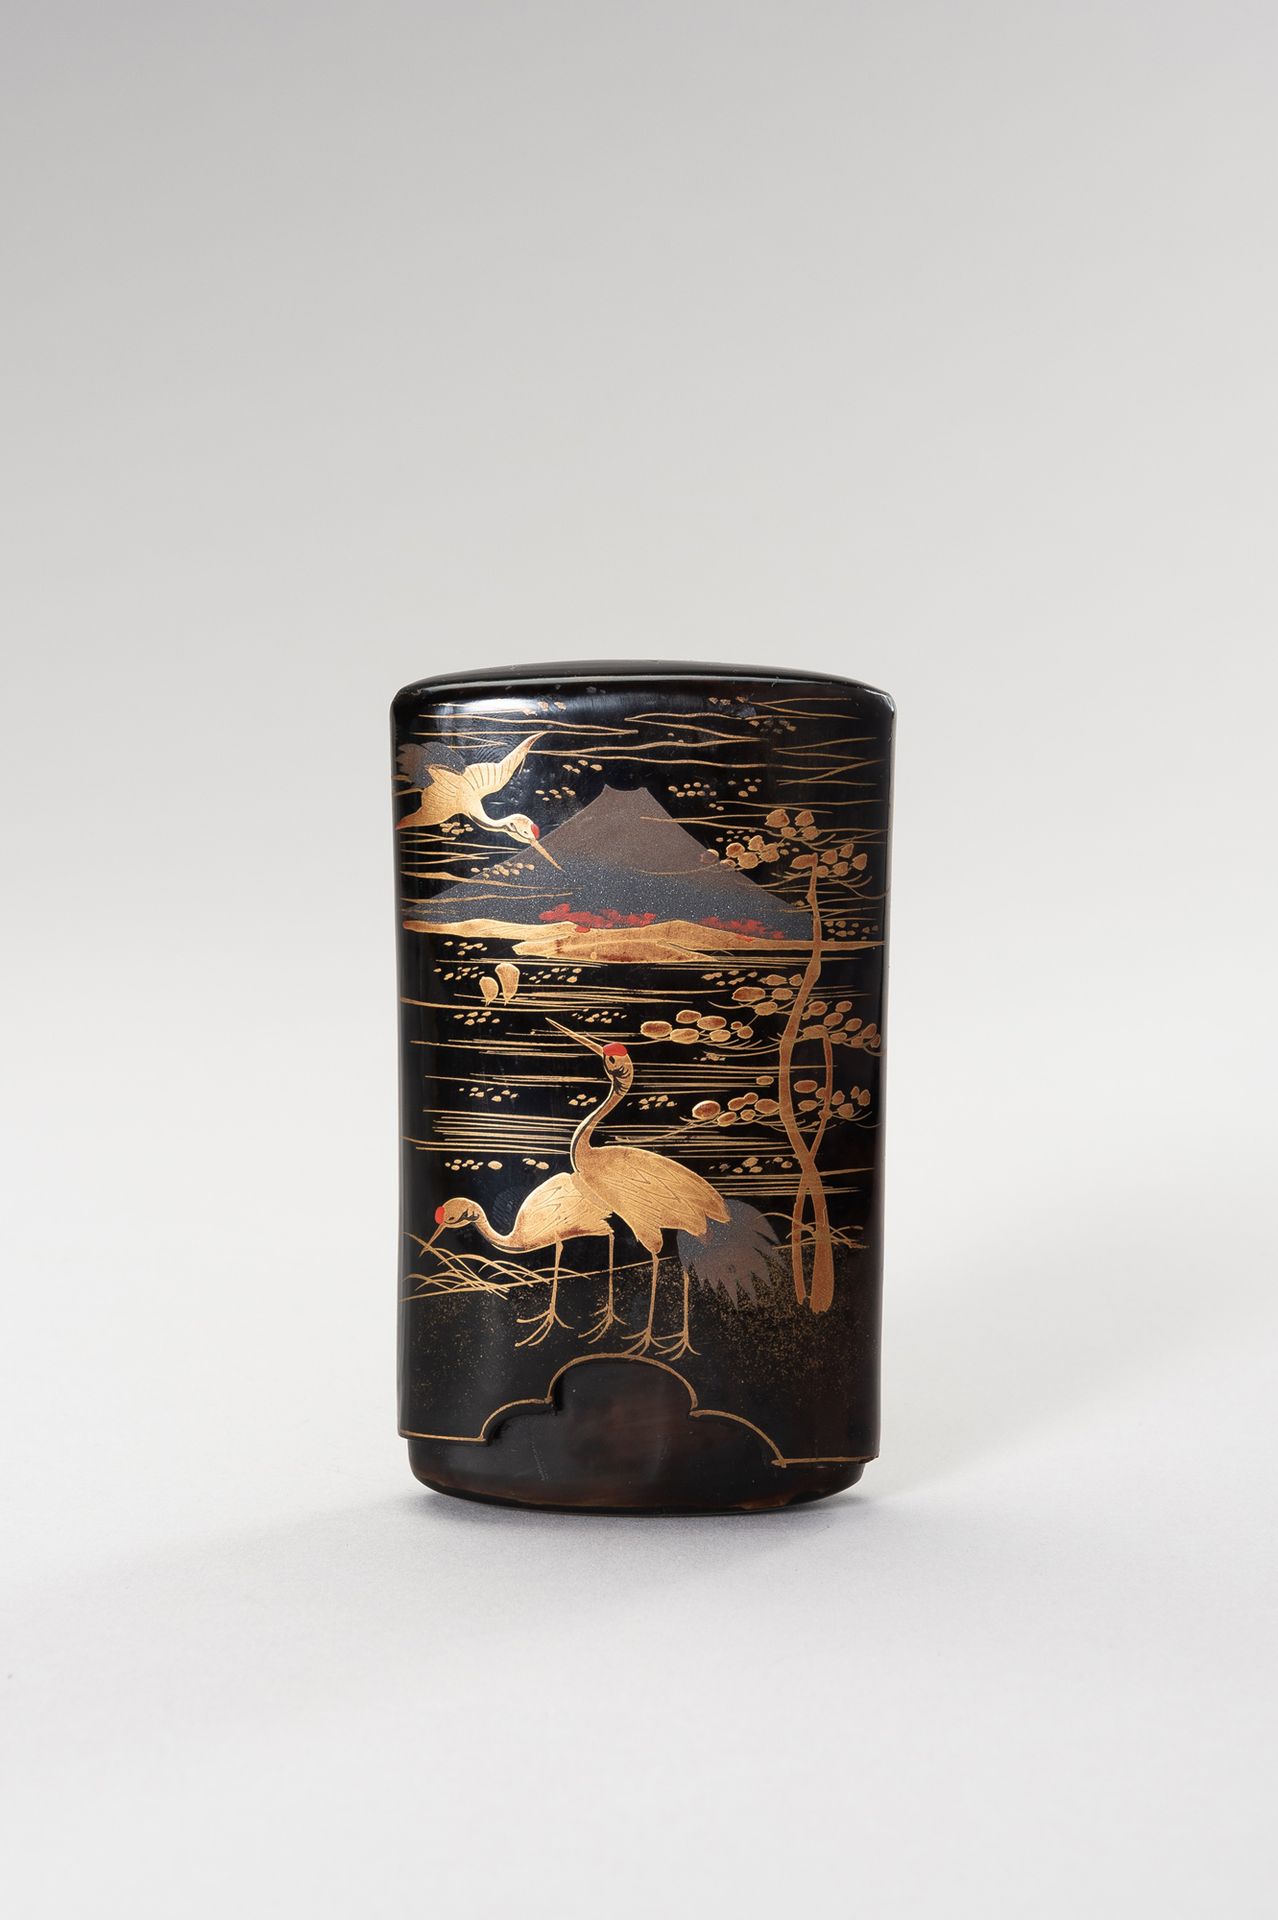 A FINE LACQUERED TORTOISESHELL CASE WITH MOUNT FUJI AND CRANES 绘有富士山和鹤的优质漆龟甲盒
日本&hellip;